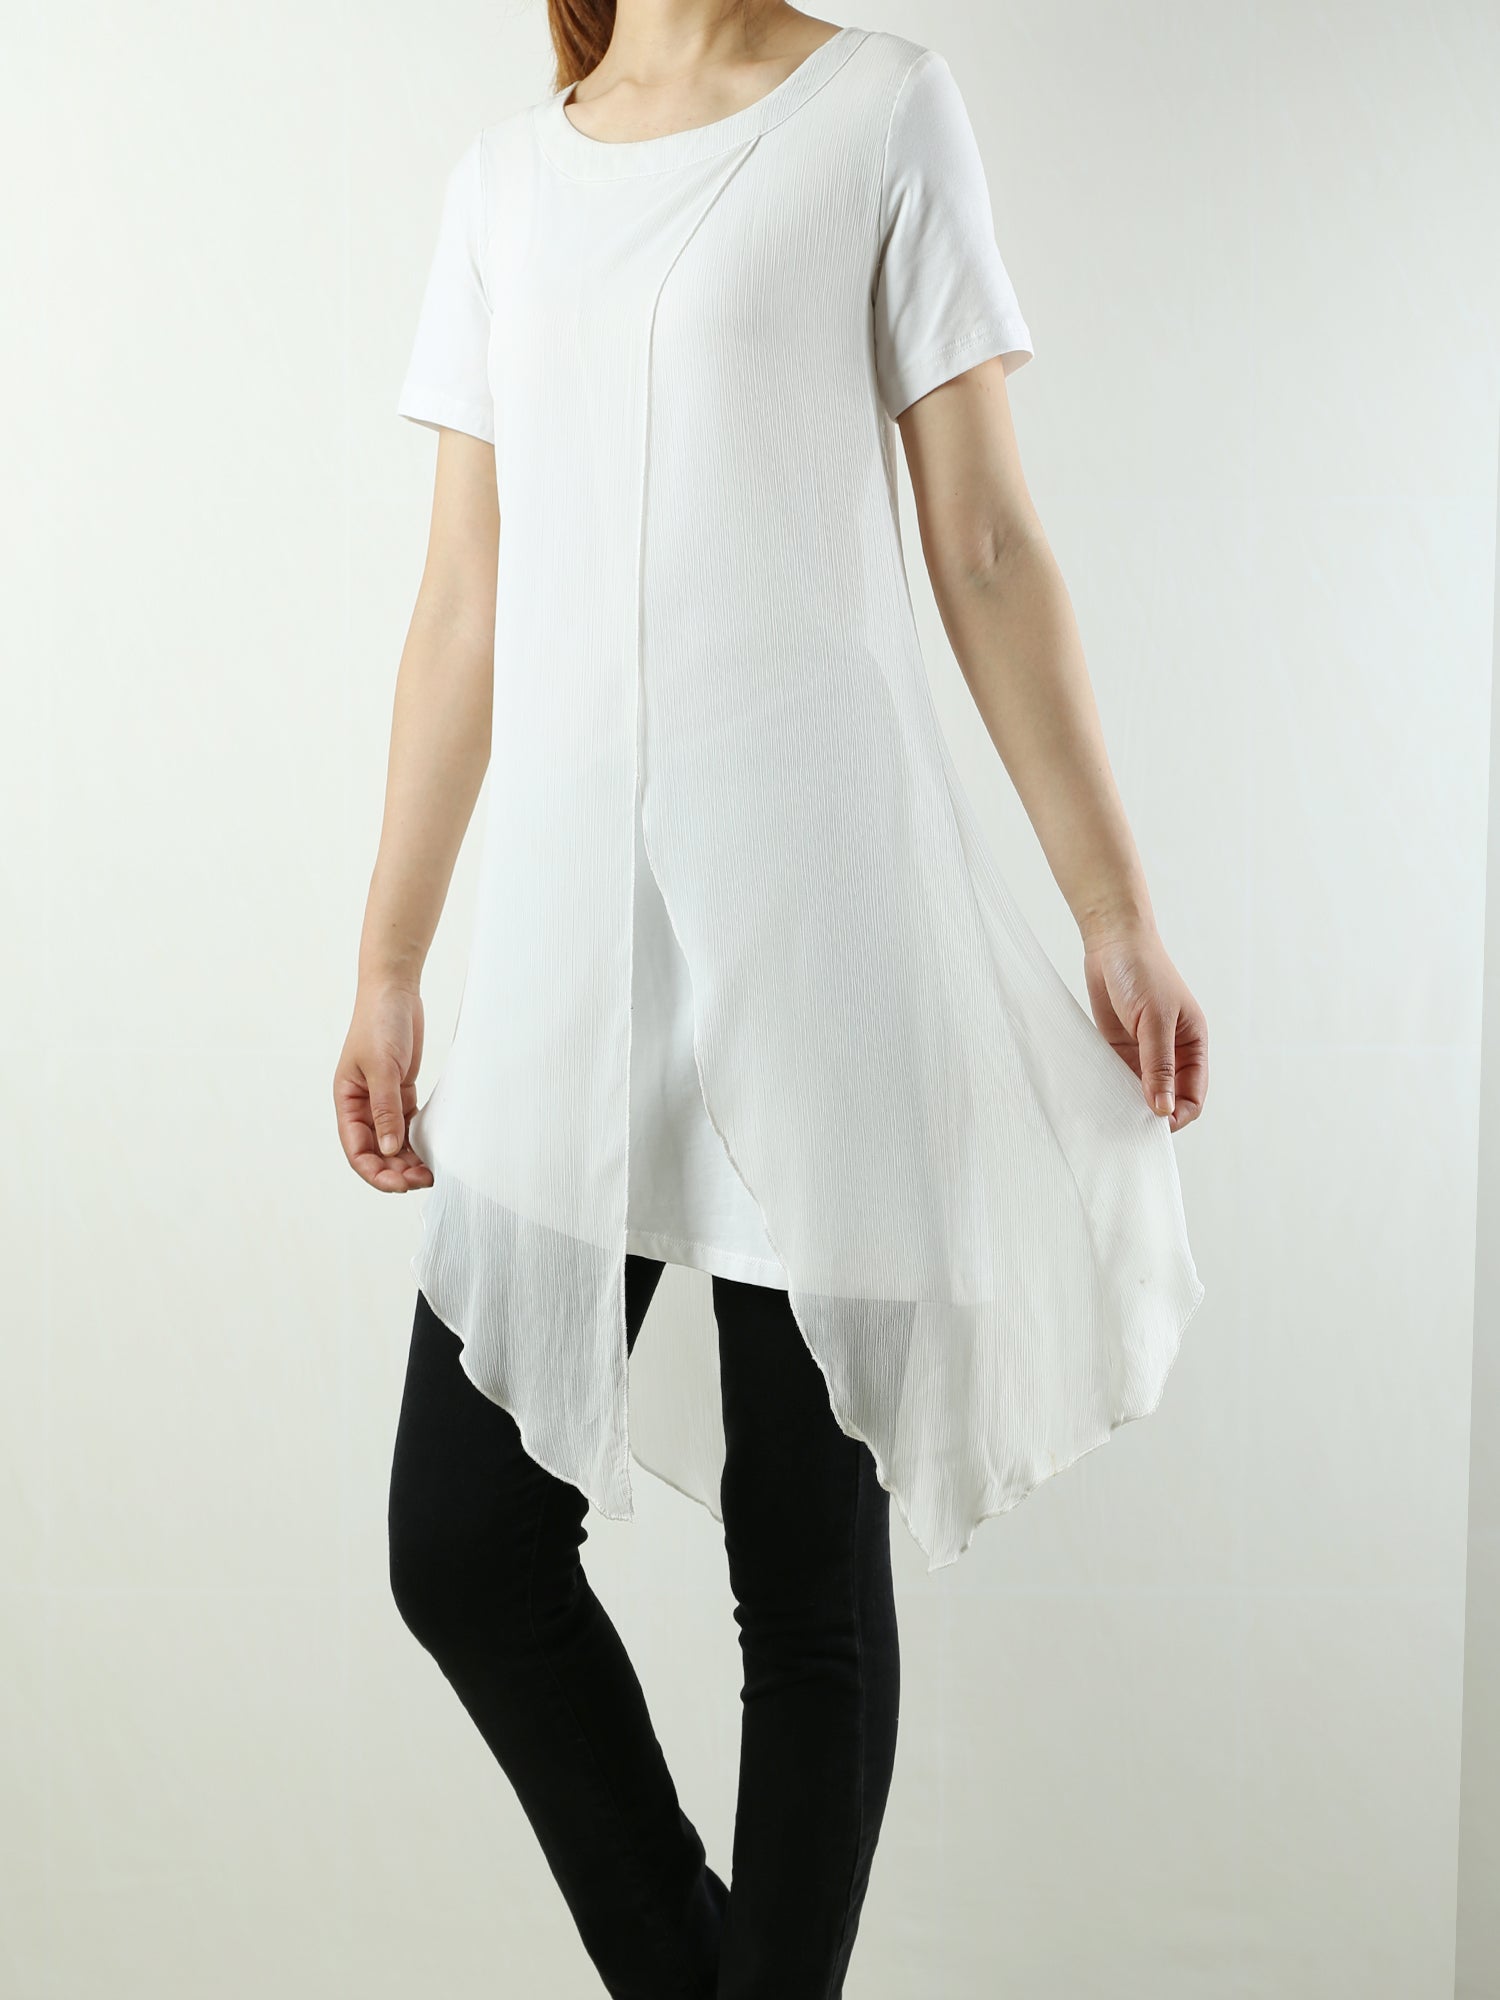 Womens cotton Tunic Dress/Short Sleeve tunic Top/Plus Size Tunic